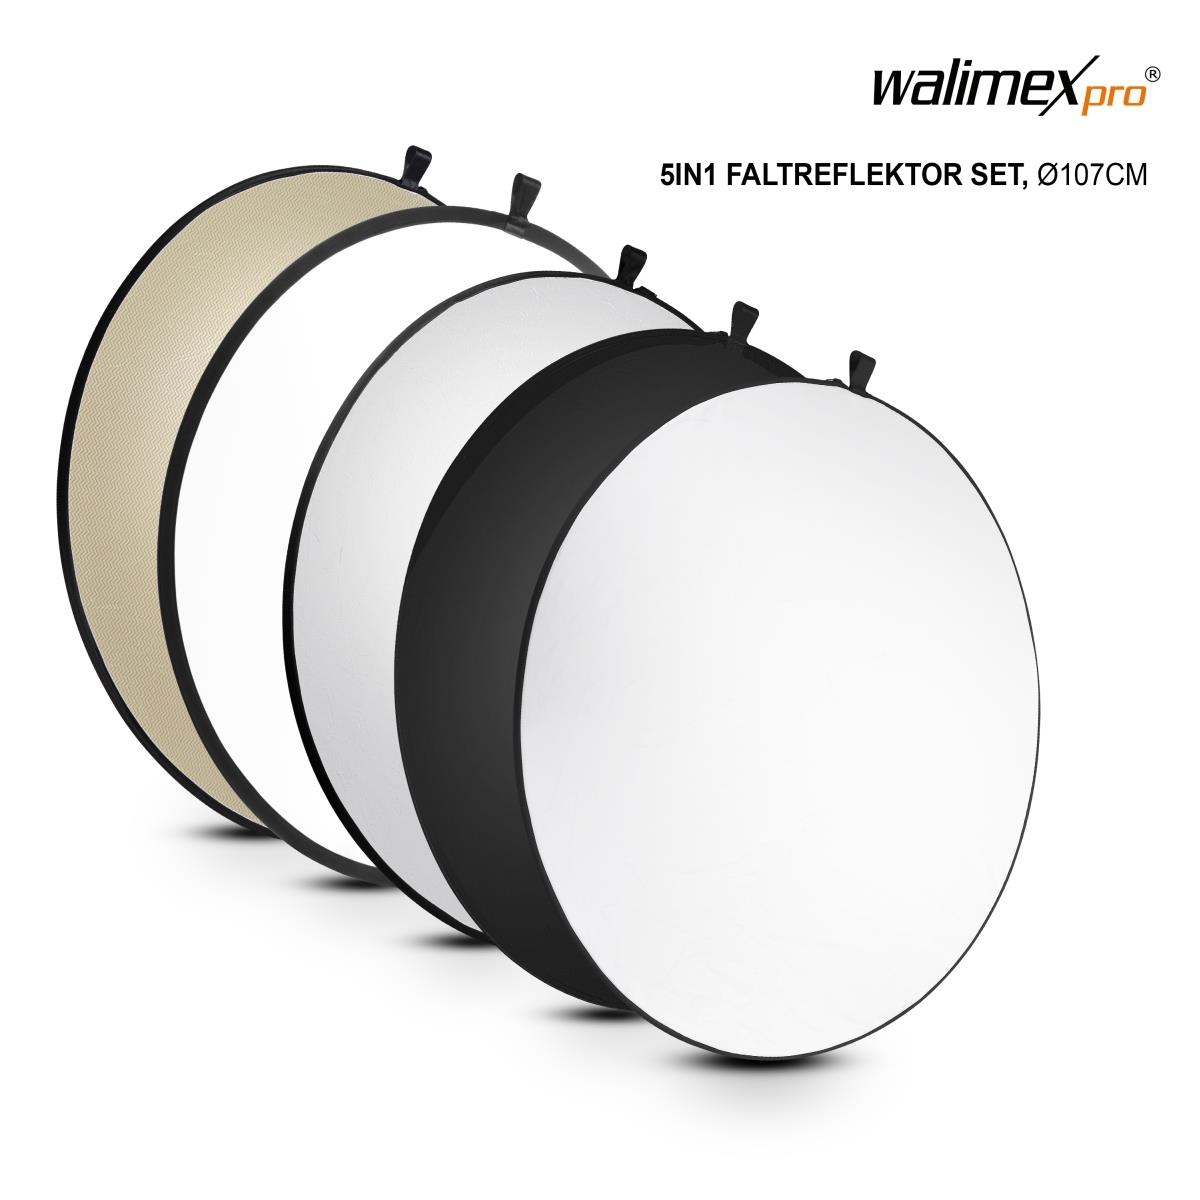 Walimex pro 5in1 Faltreflektor Set wavy, Ø107cm